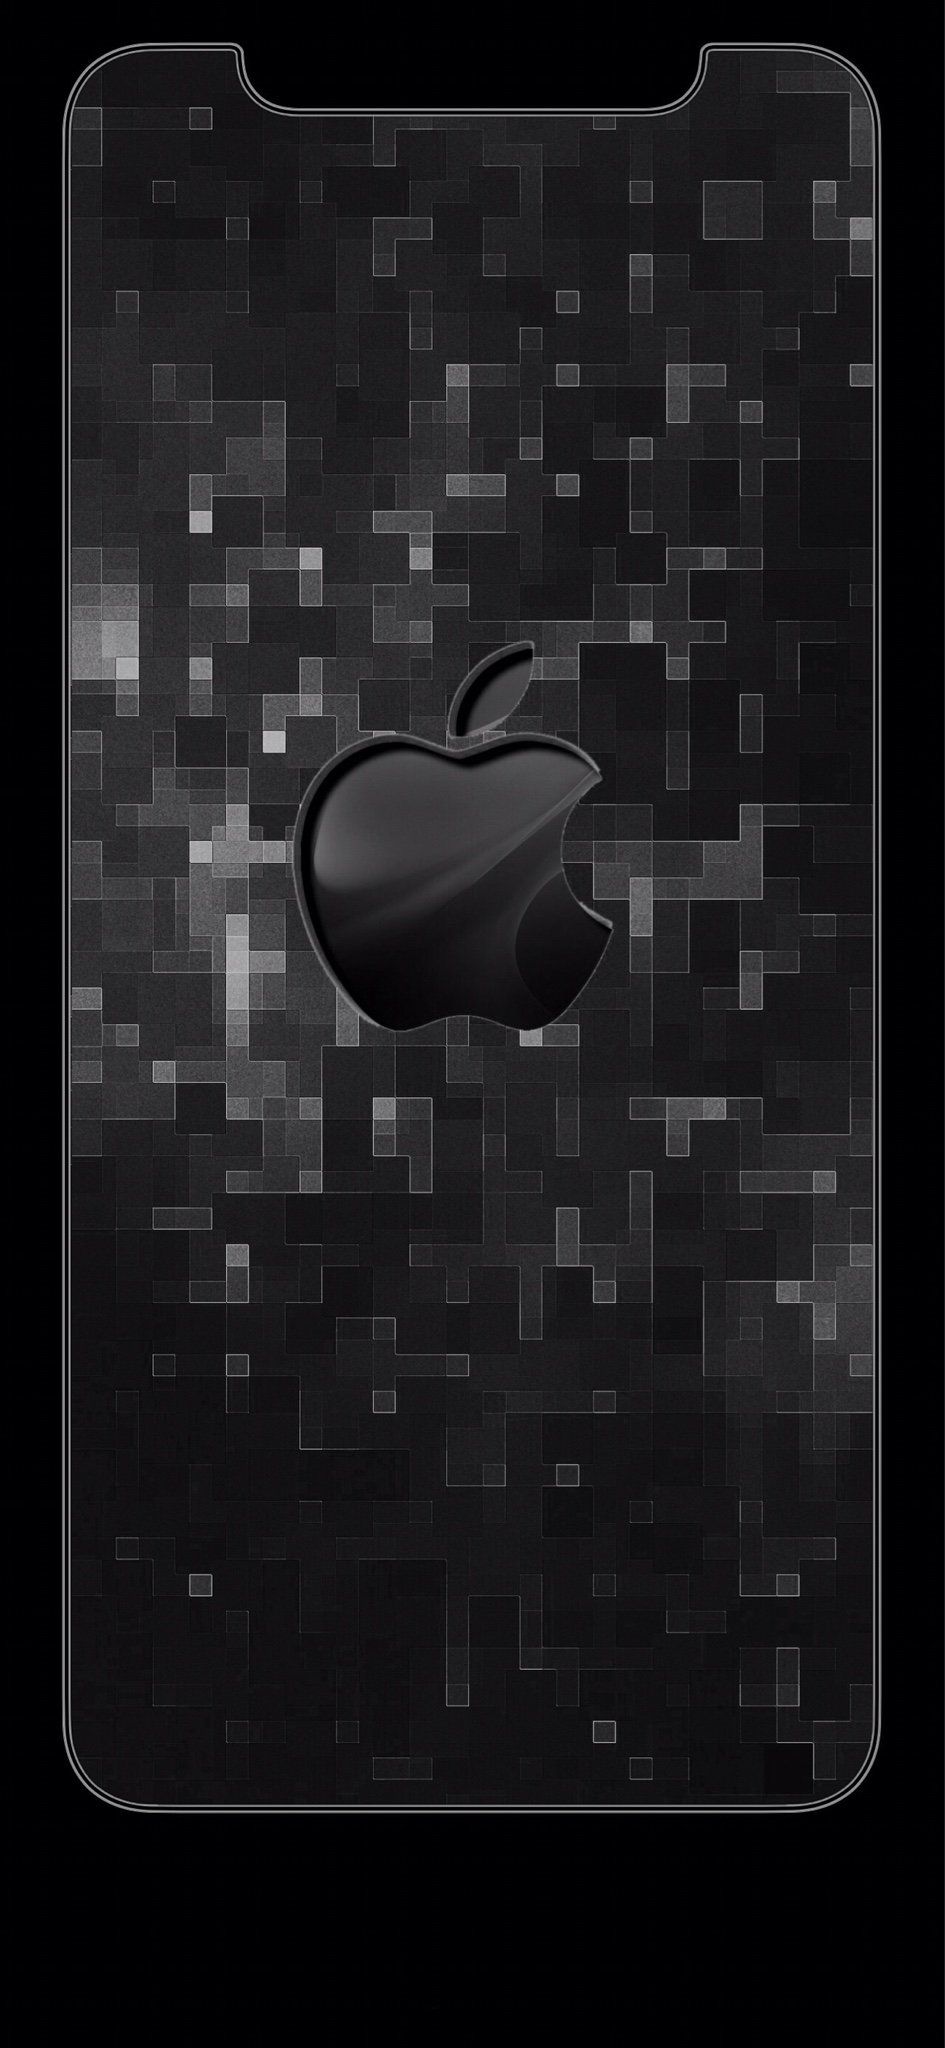 Apple Iphone Wallpaper Hd Iphone X - HD Wallpaper 